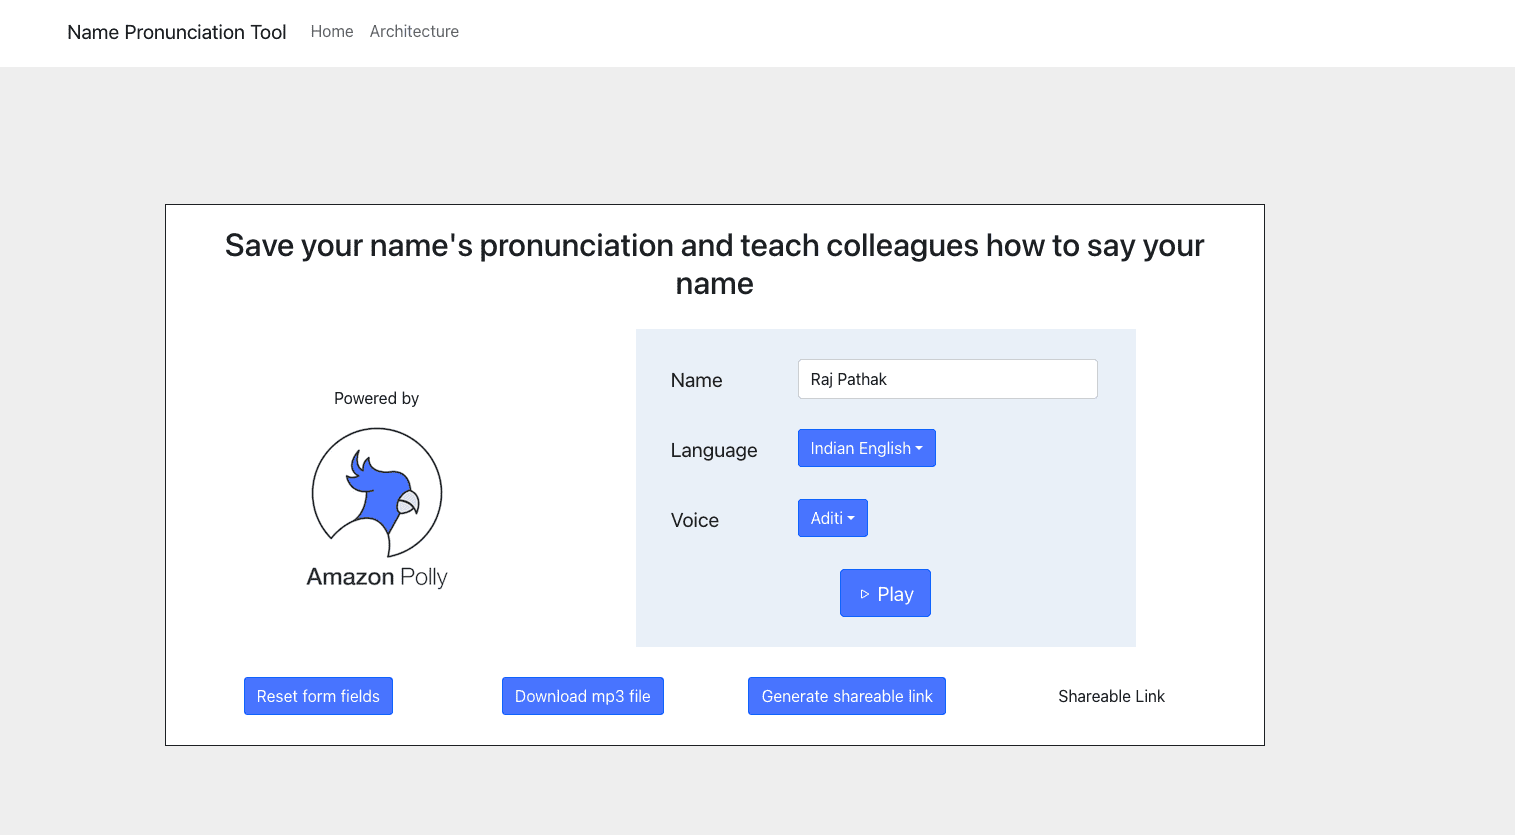 Name pronunciation tool interface